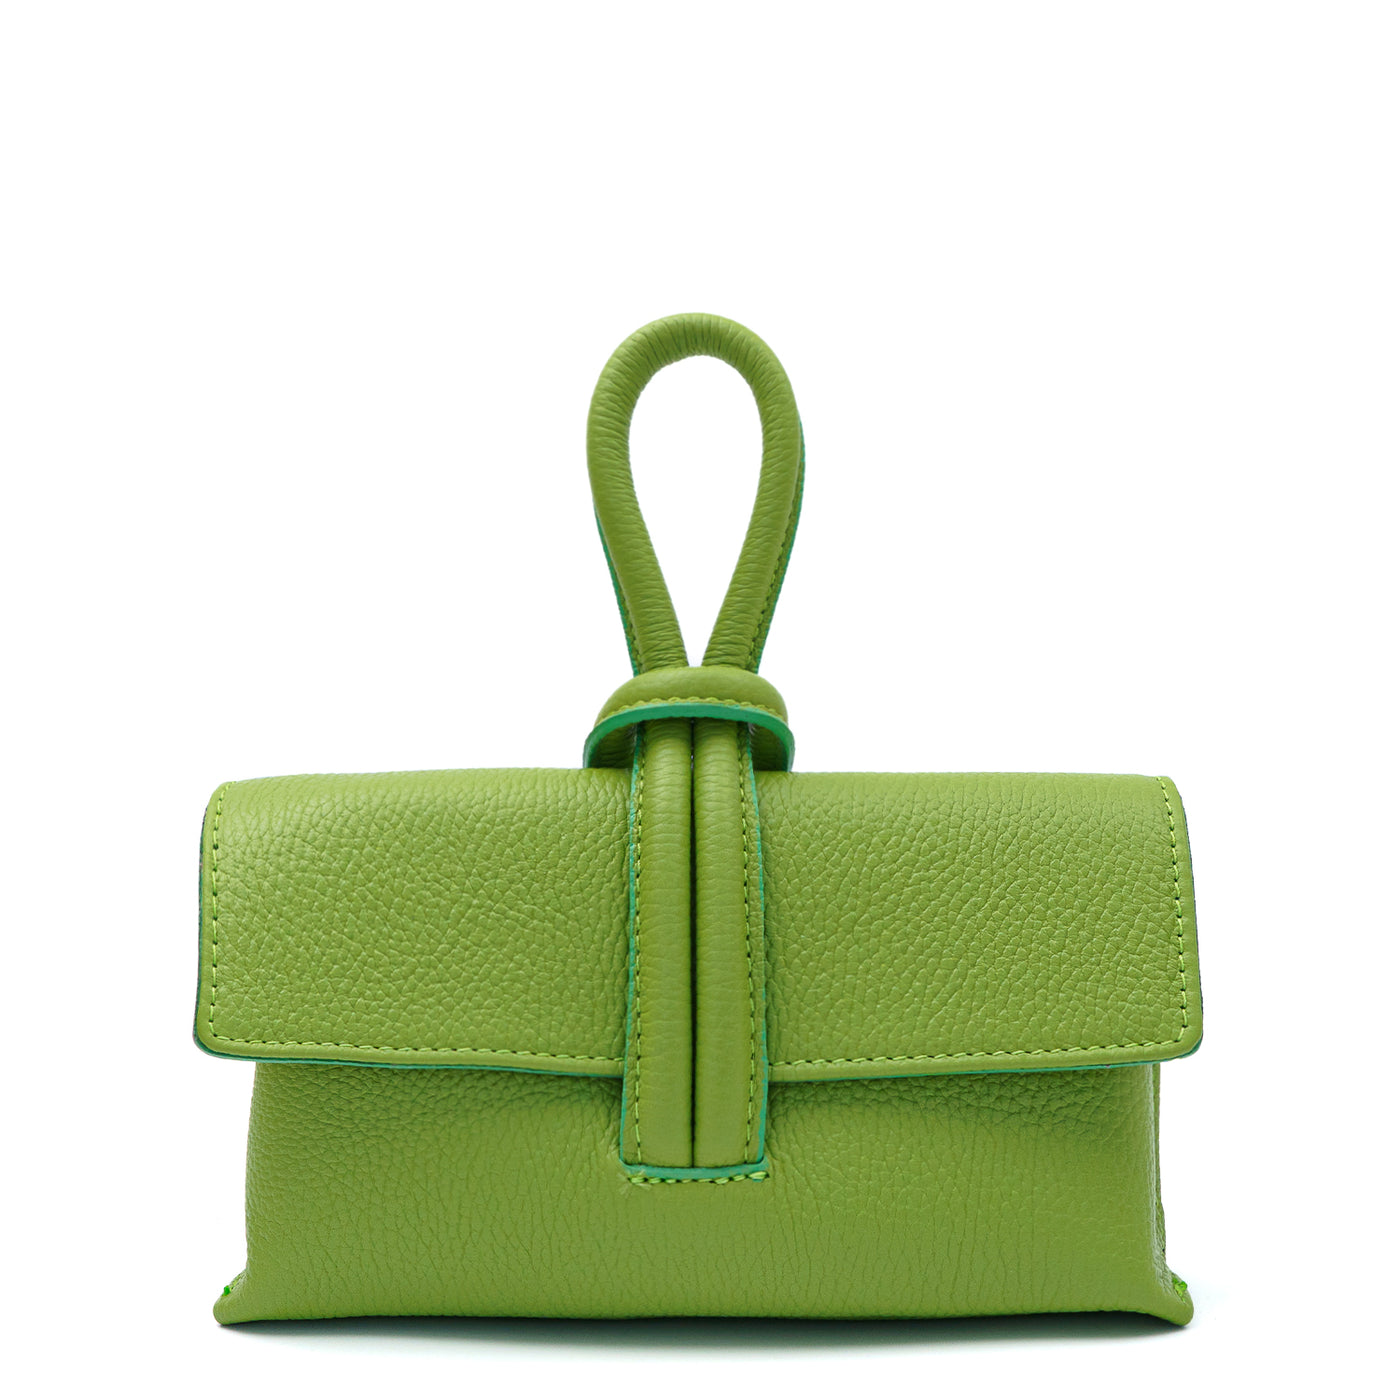 Leather bag "Barletta" Neon green